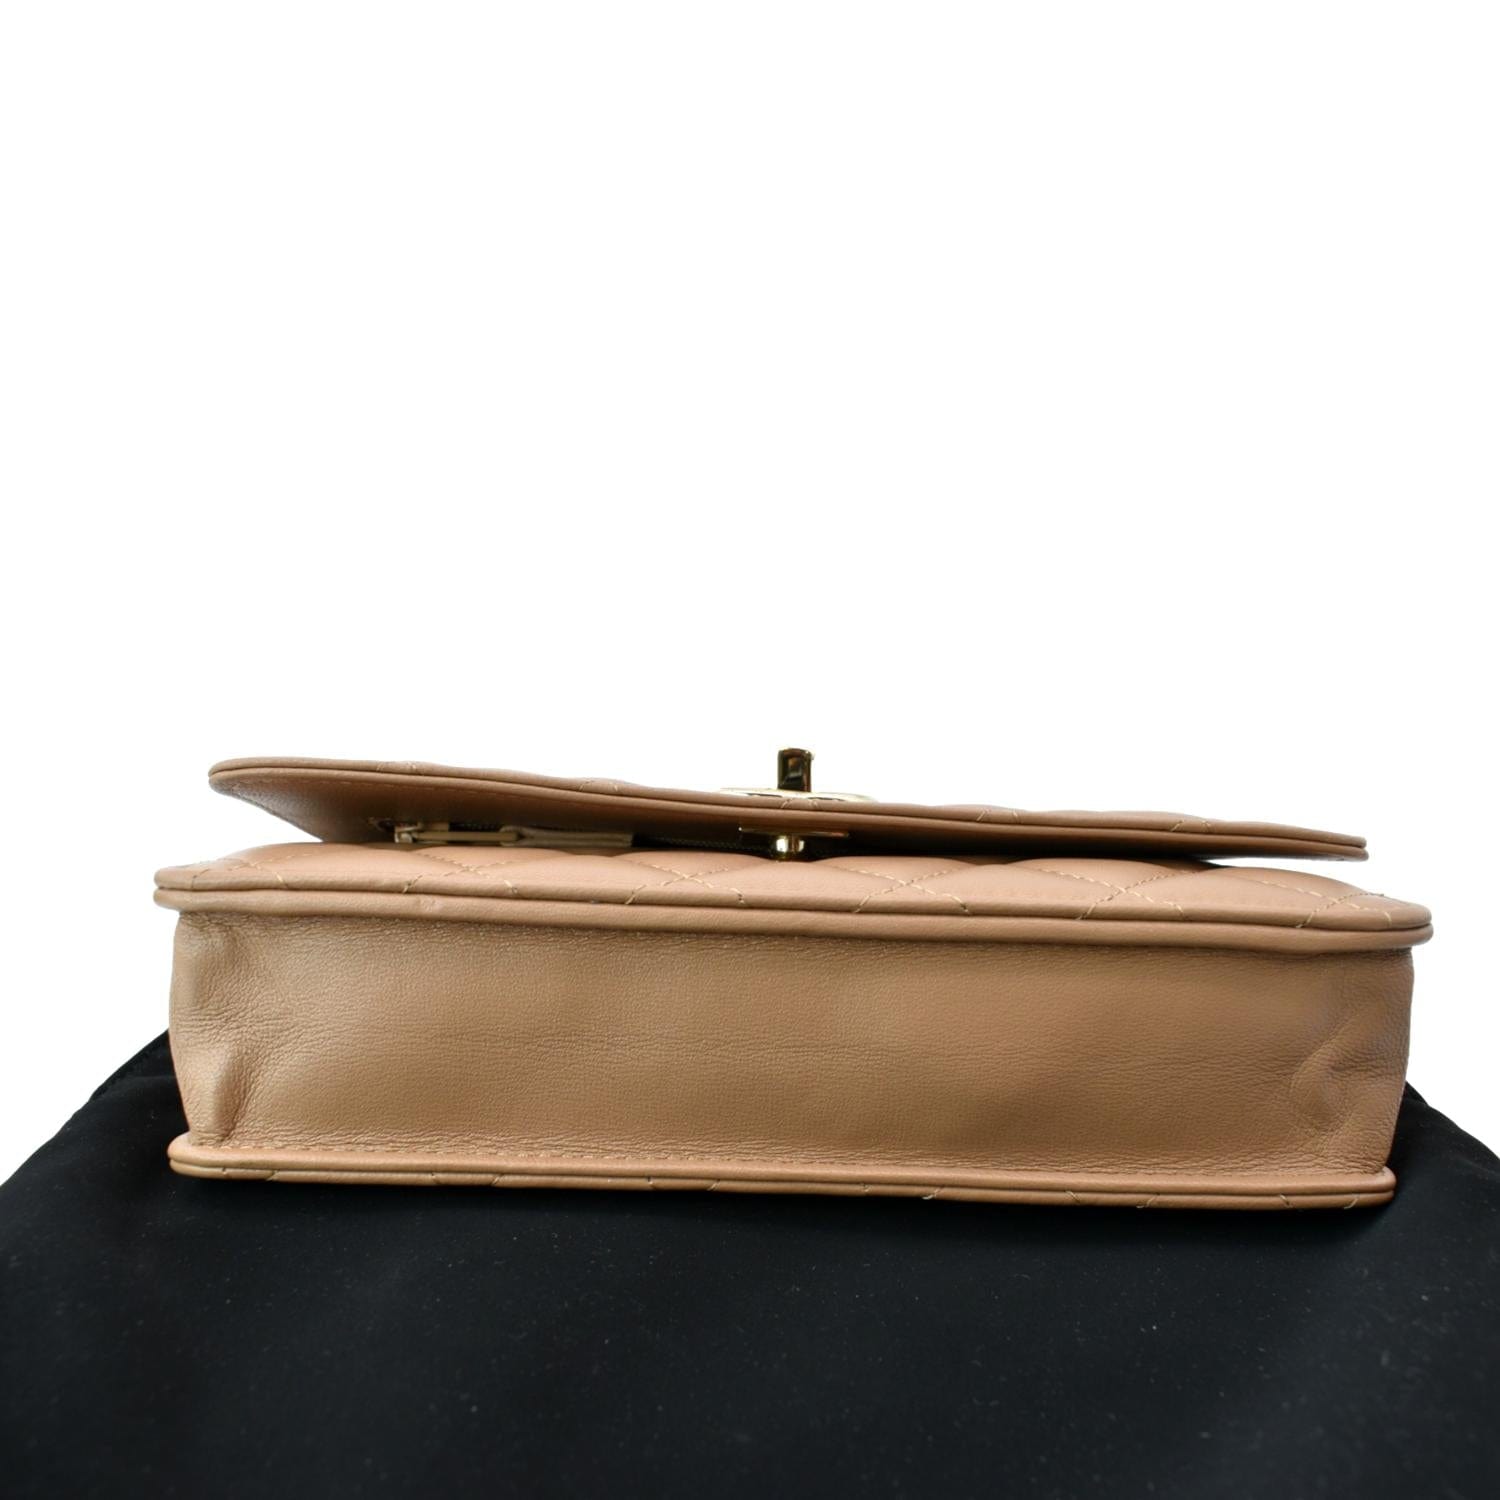 Chanel Black Lambskin Flap Card Holder Wallet - New in Box - The